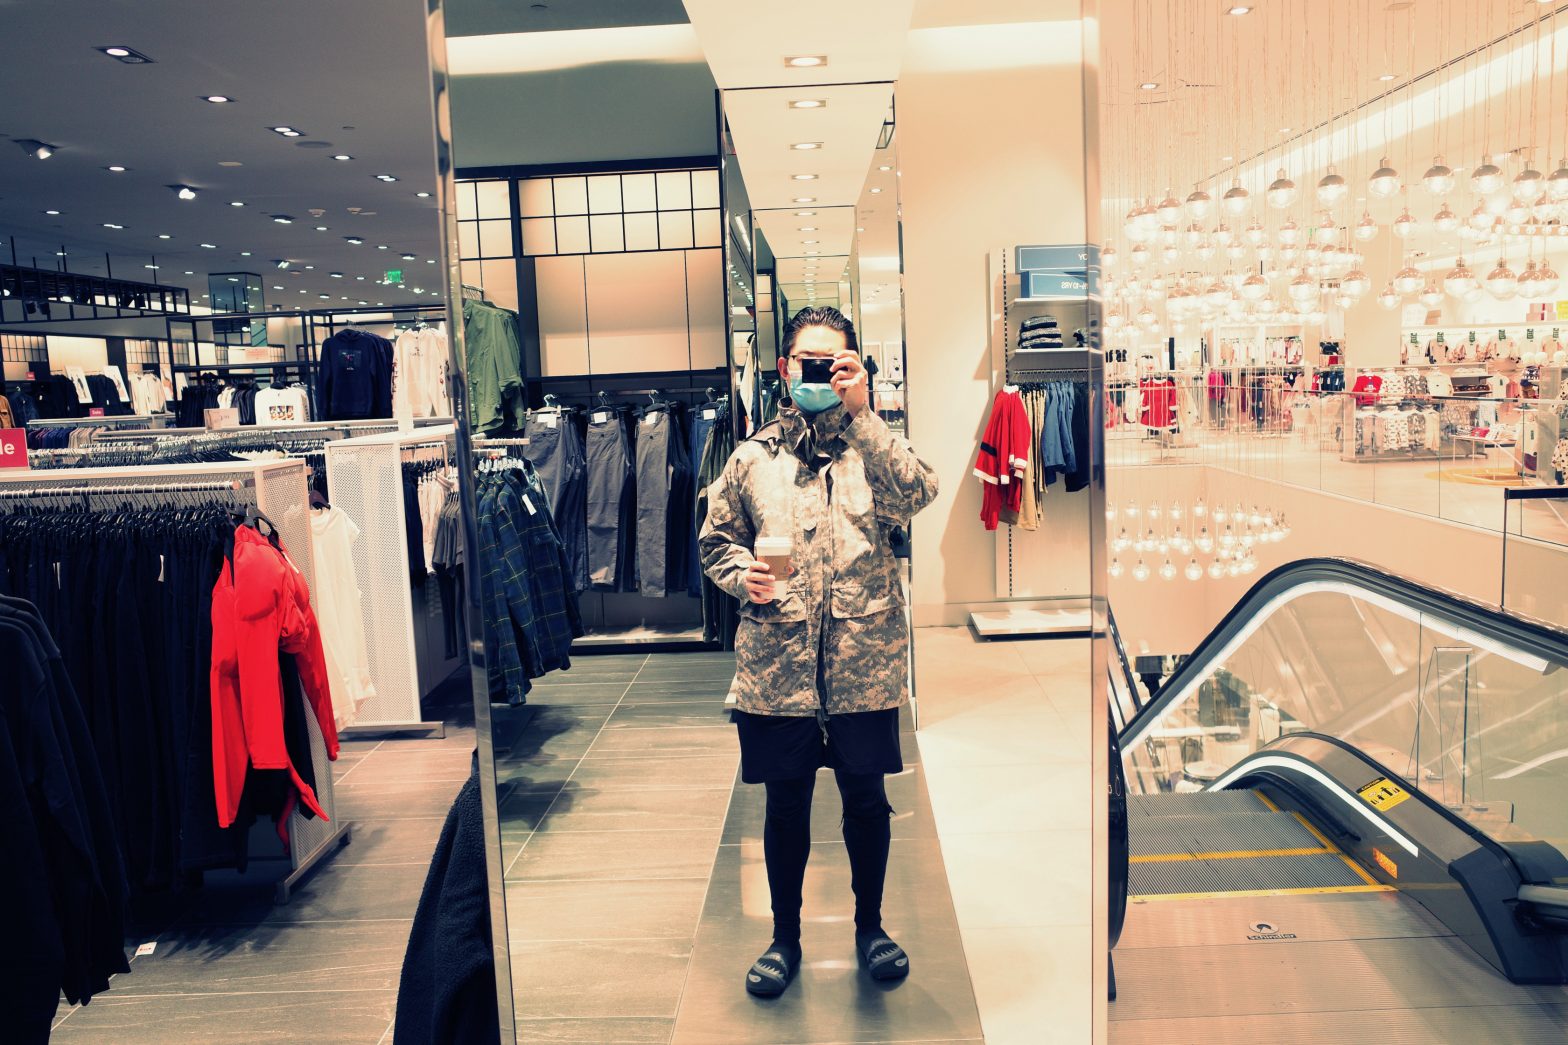 Selfie Ricoh mall